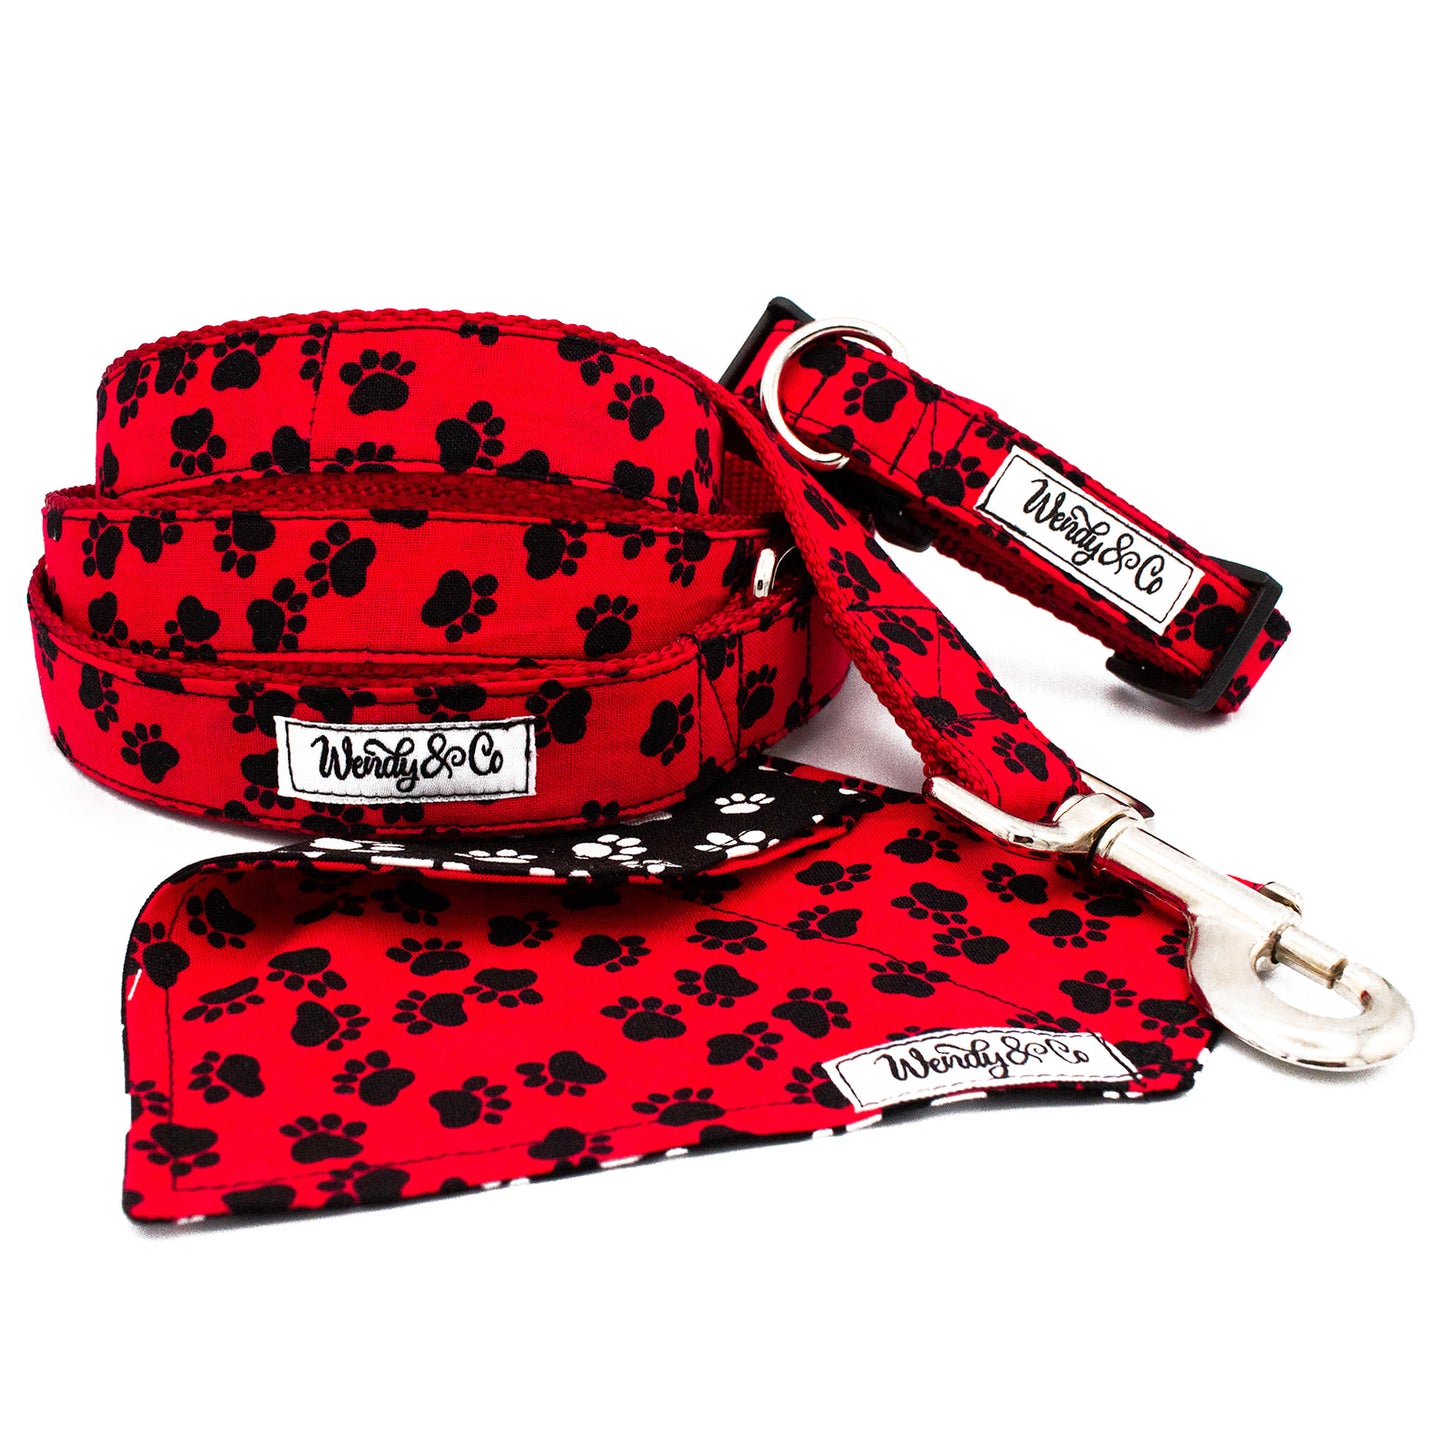 Red dog collar, leash and bandana with black paw prints.